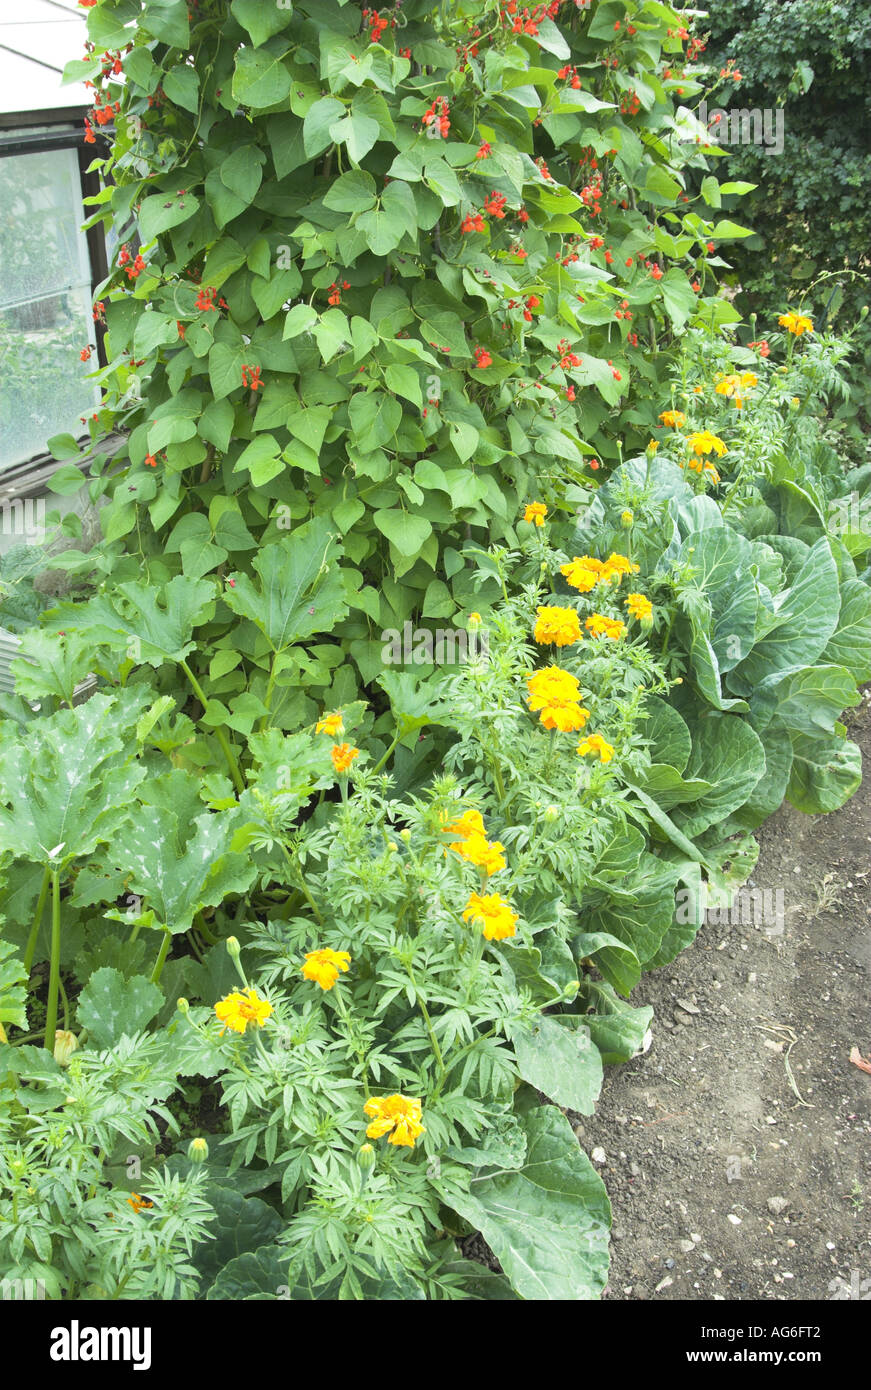 Garden vegetali Foto Stock